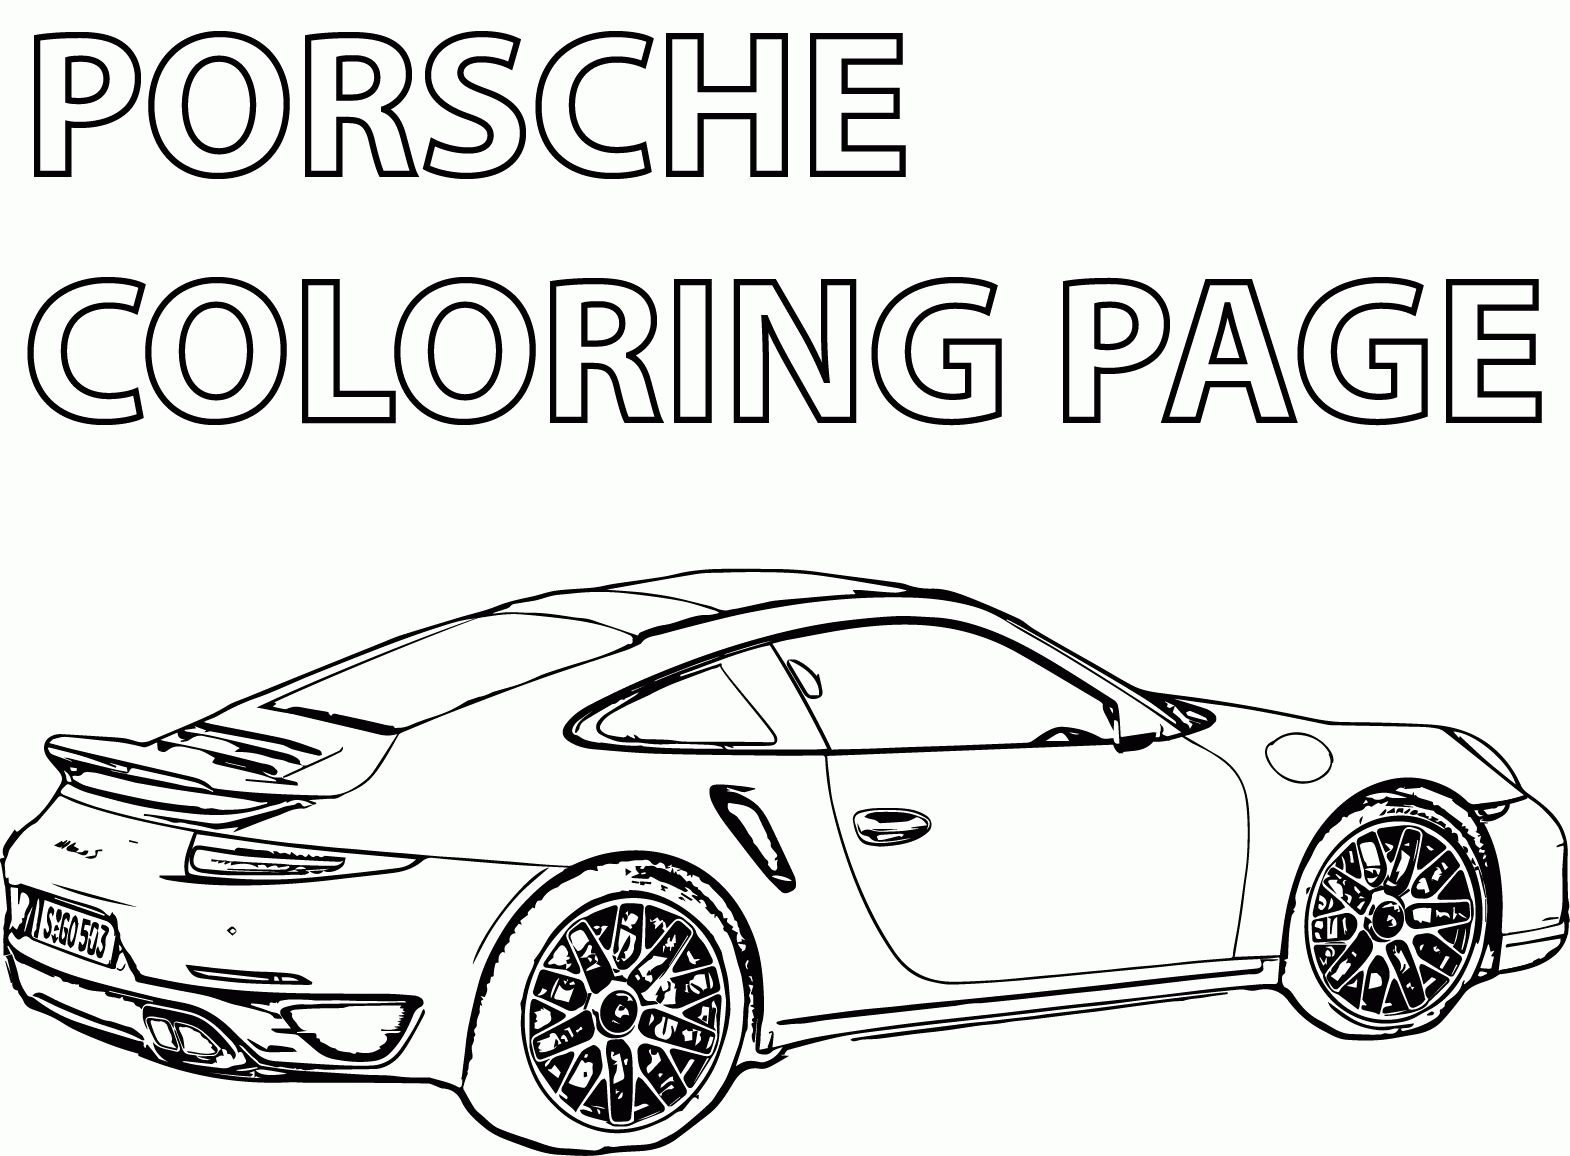 Porsche 911 Turbo S Coloring Page